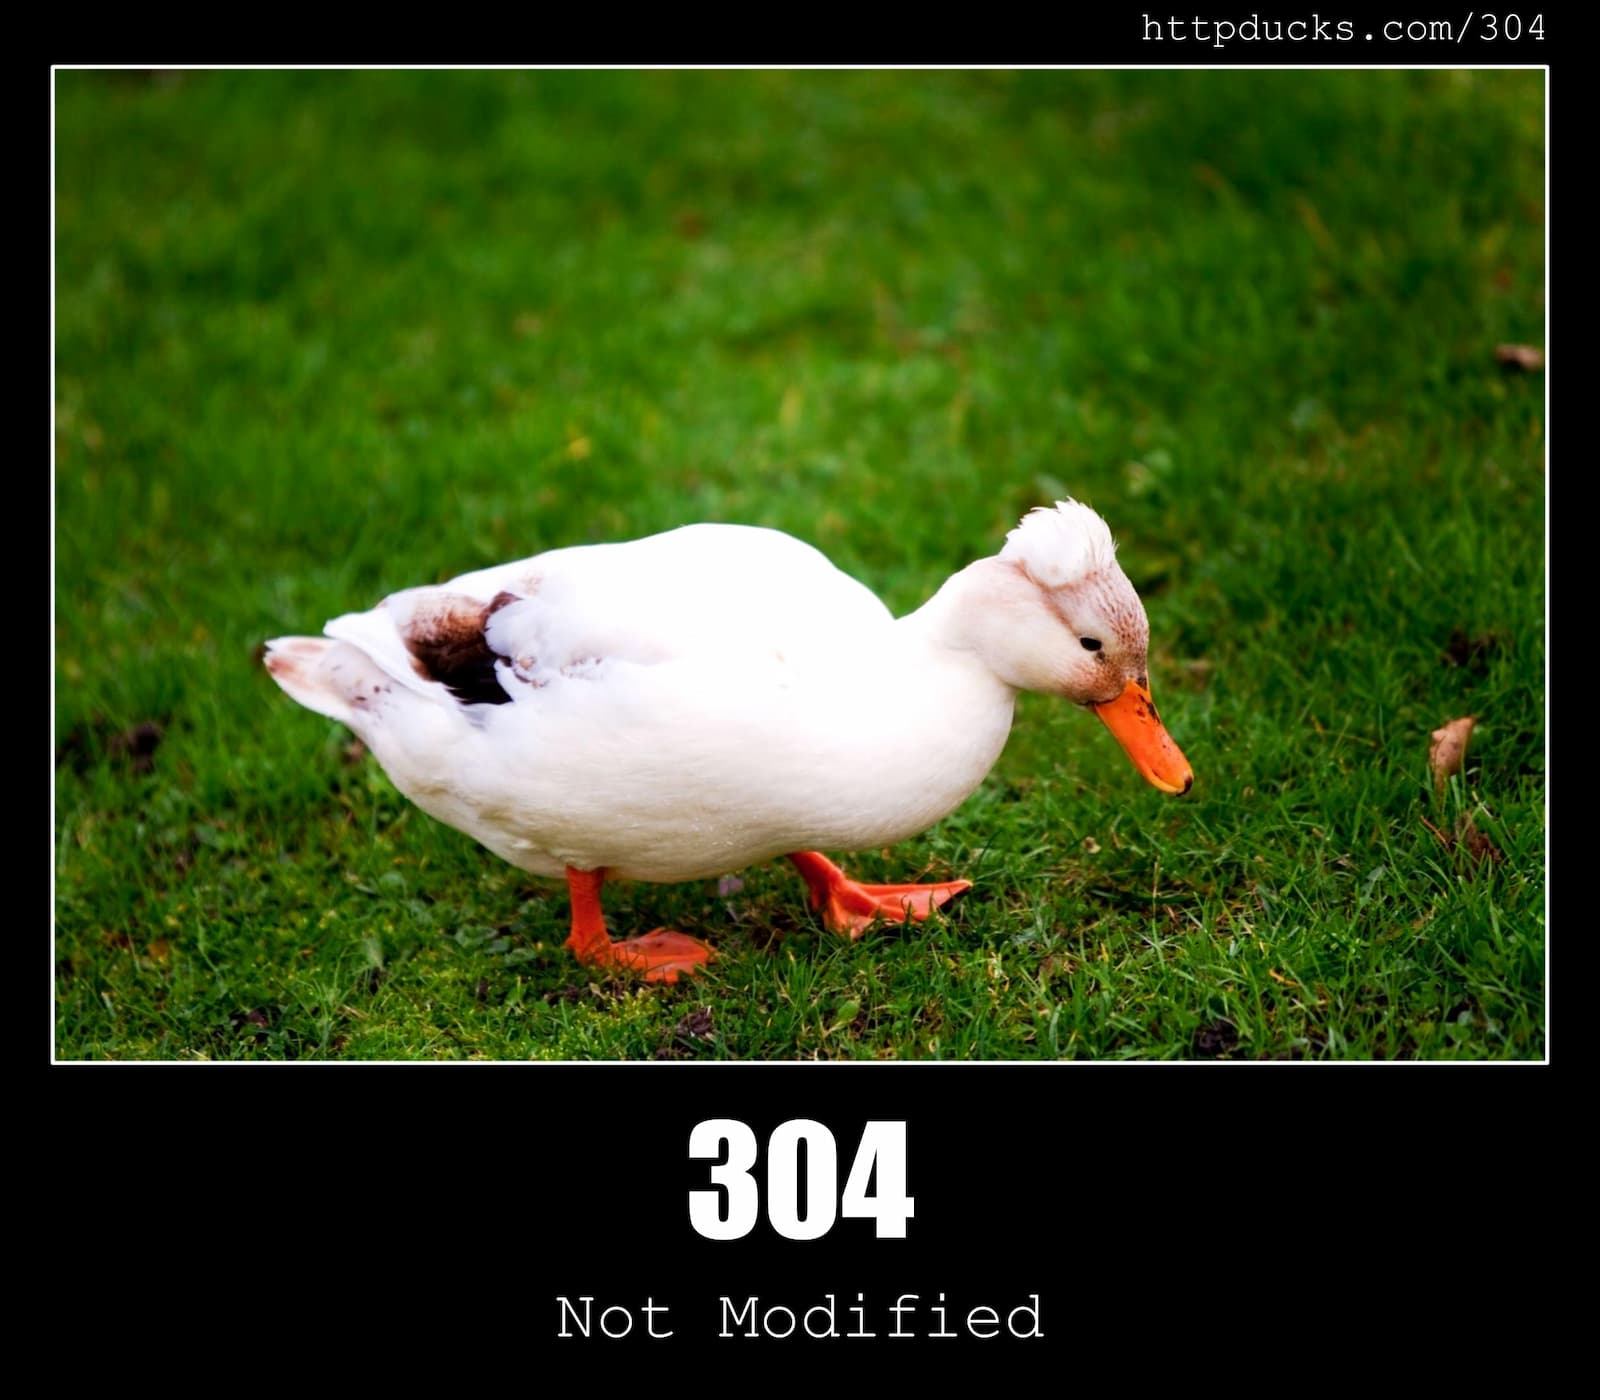 HTTP Status Code 304 Not Modified & Ducks